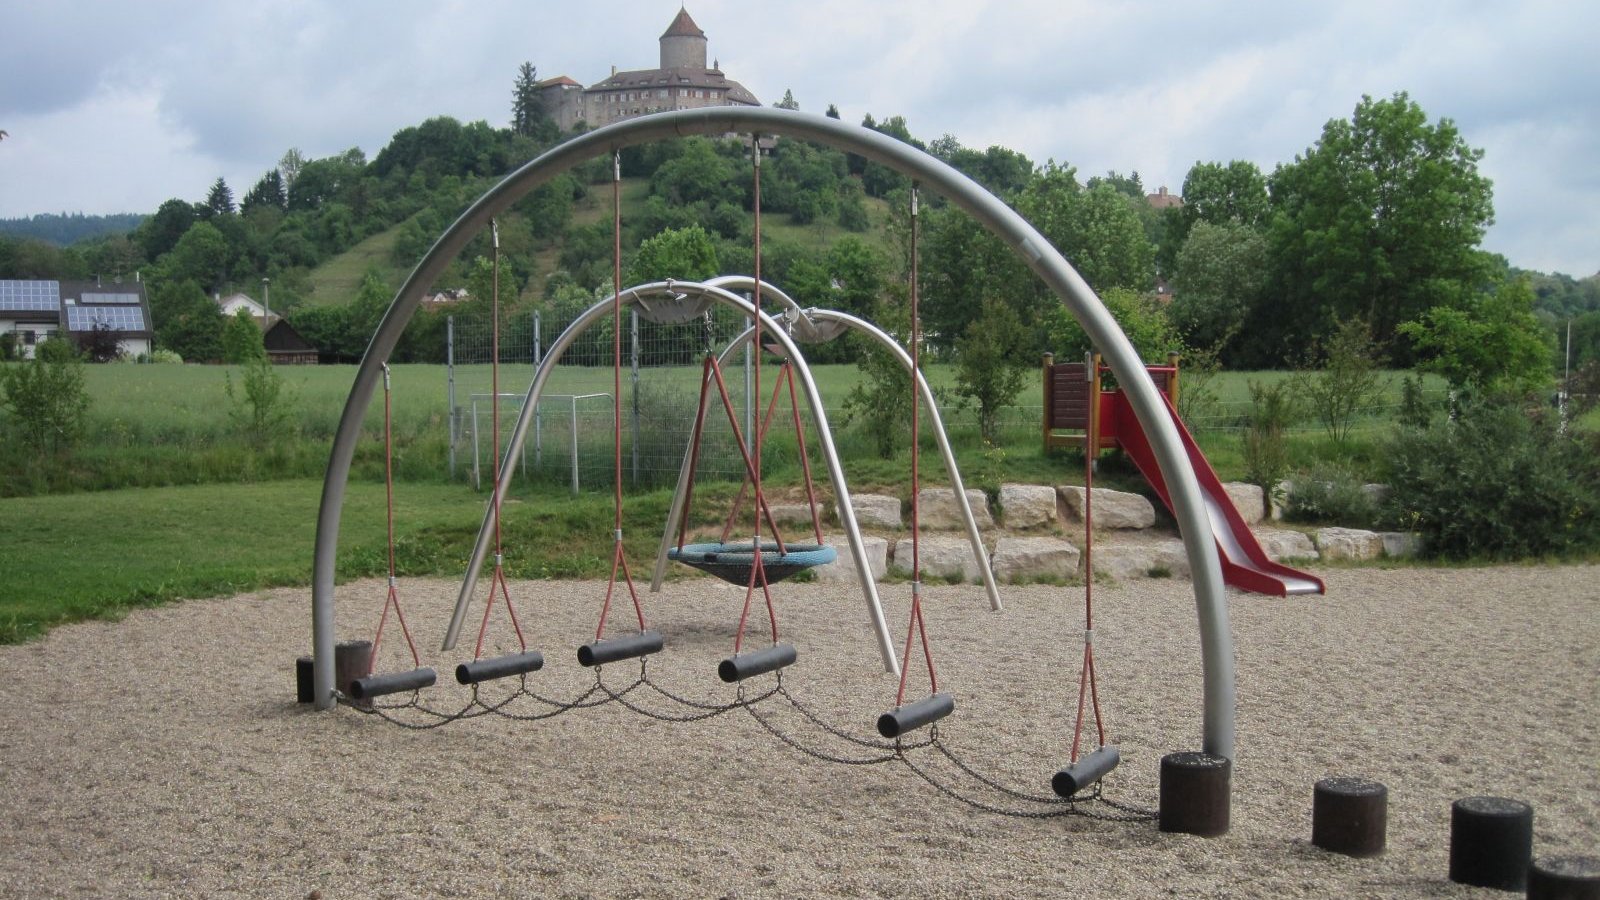                                                     Spielplatz Burgblick                                    